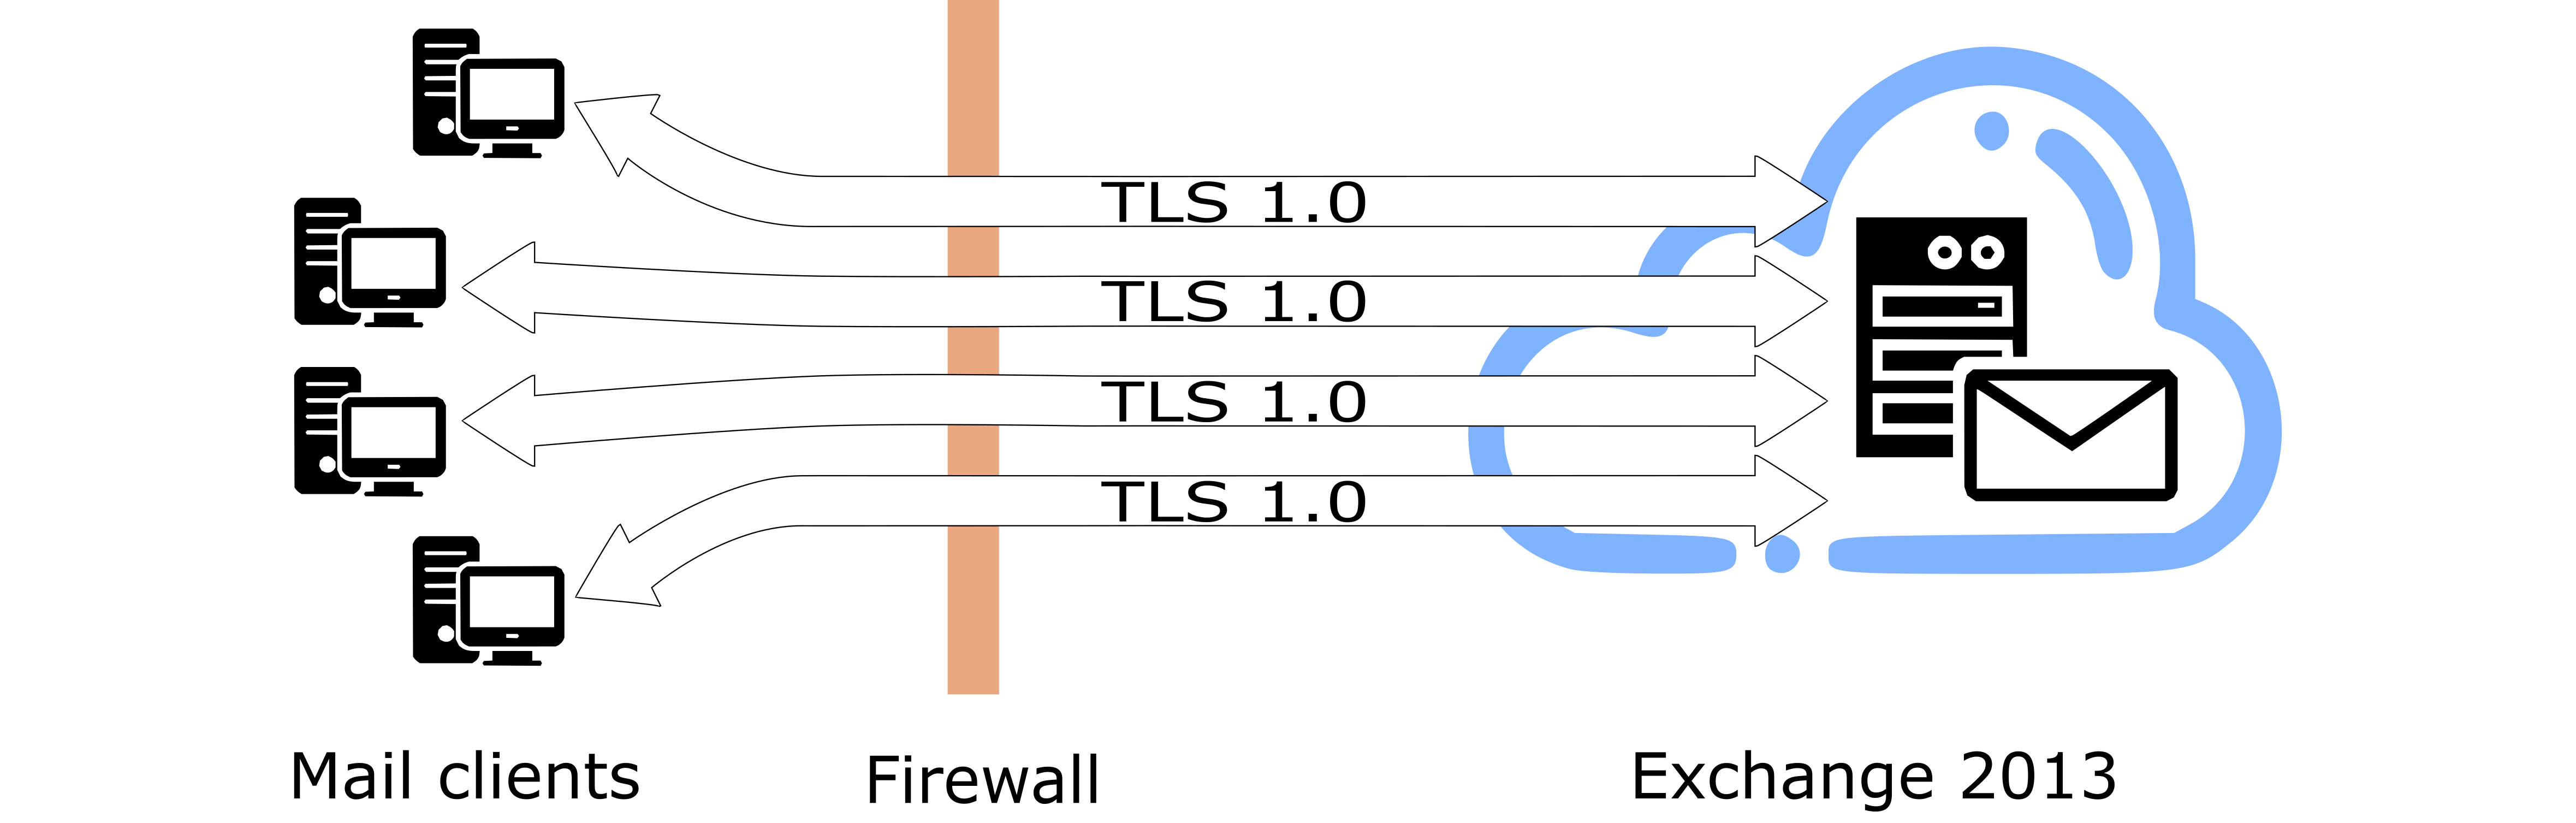 test tls 1.2 support in net framework